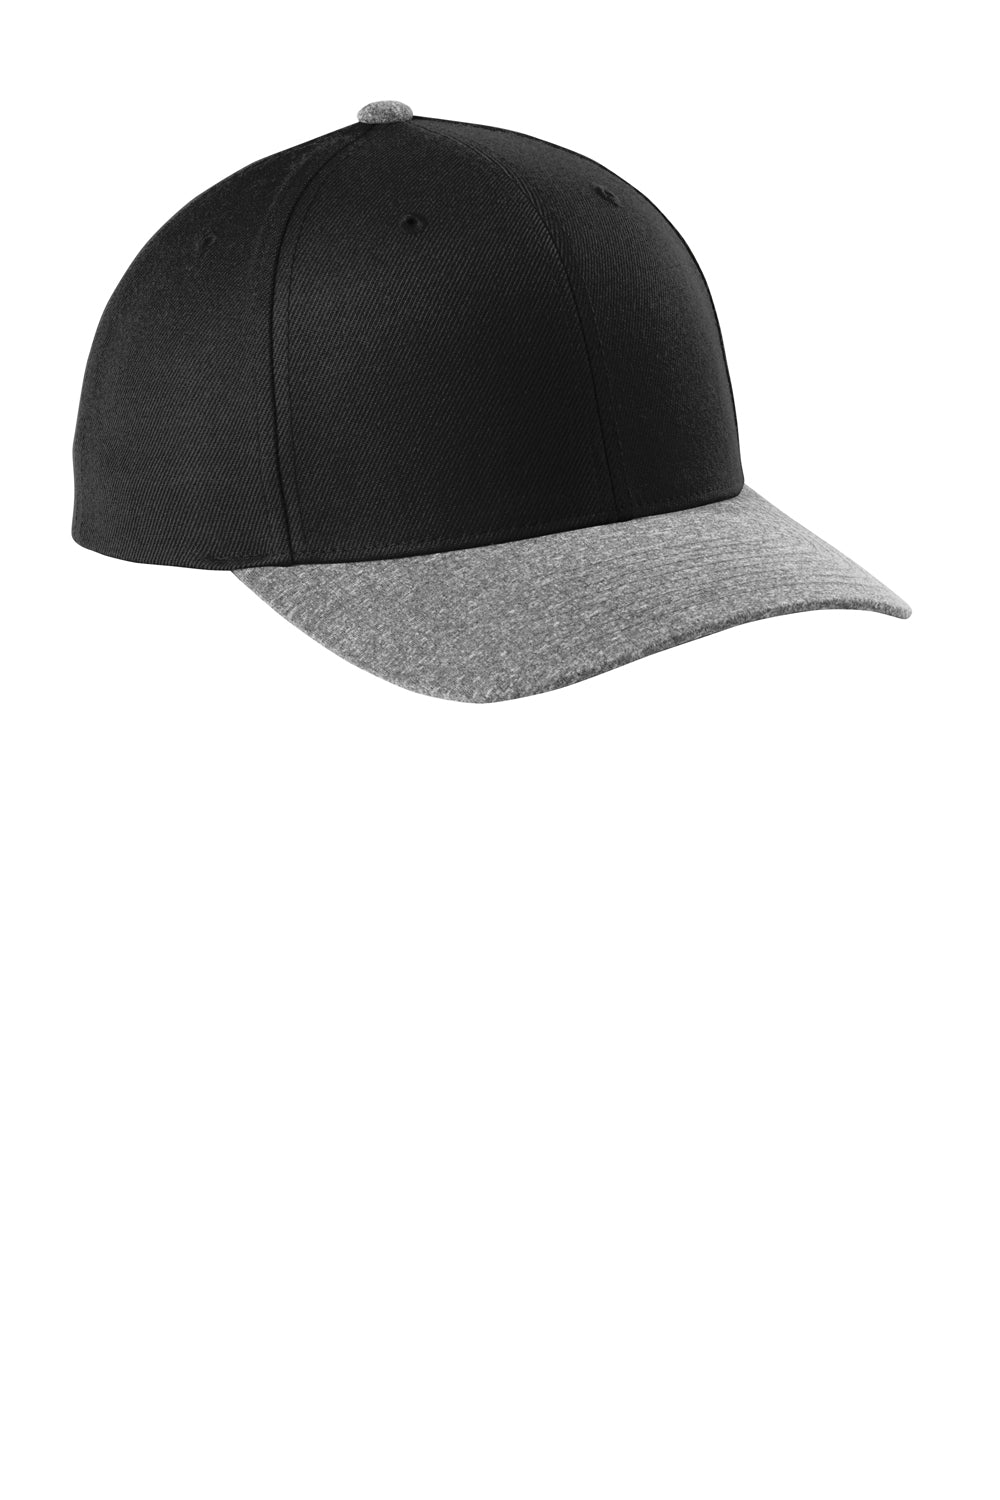 Sport-Tek STC43 Curve Bill Snapback Hat Black/Heather Grey Front